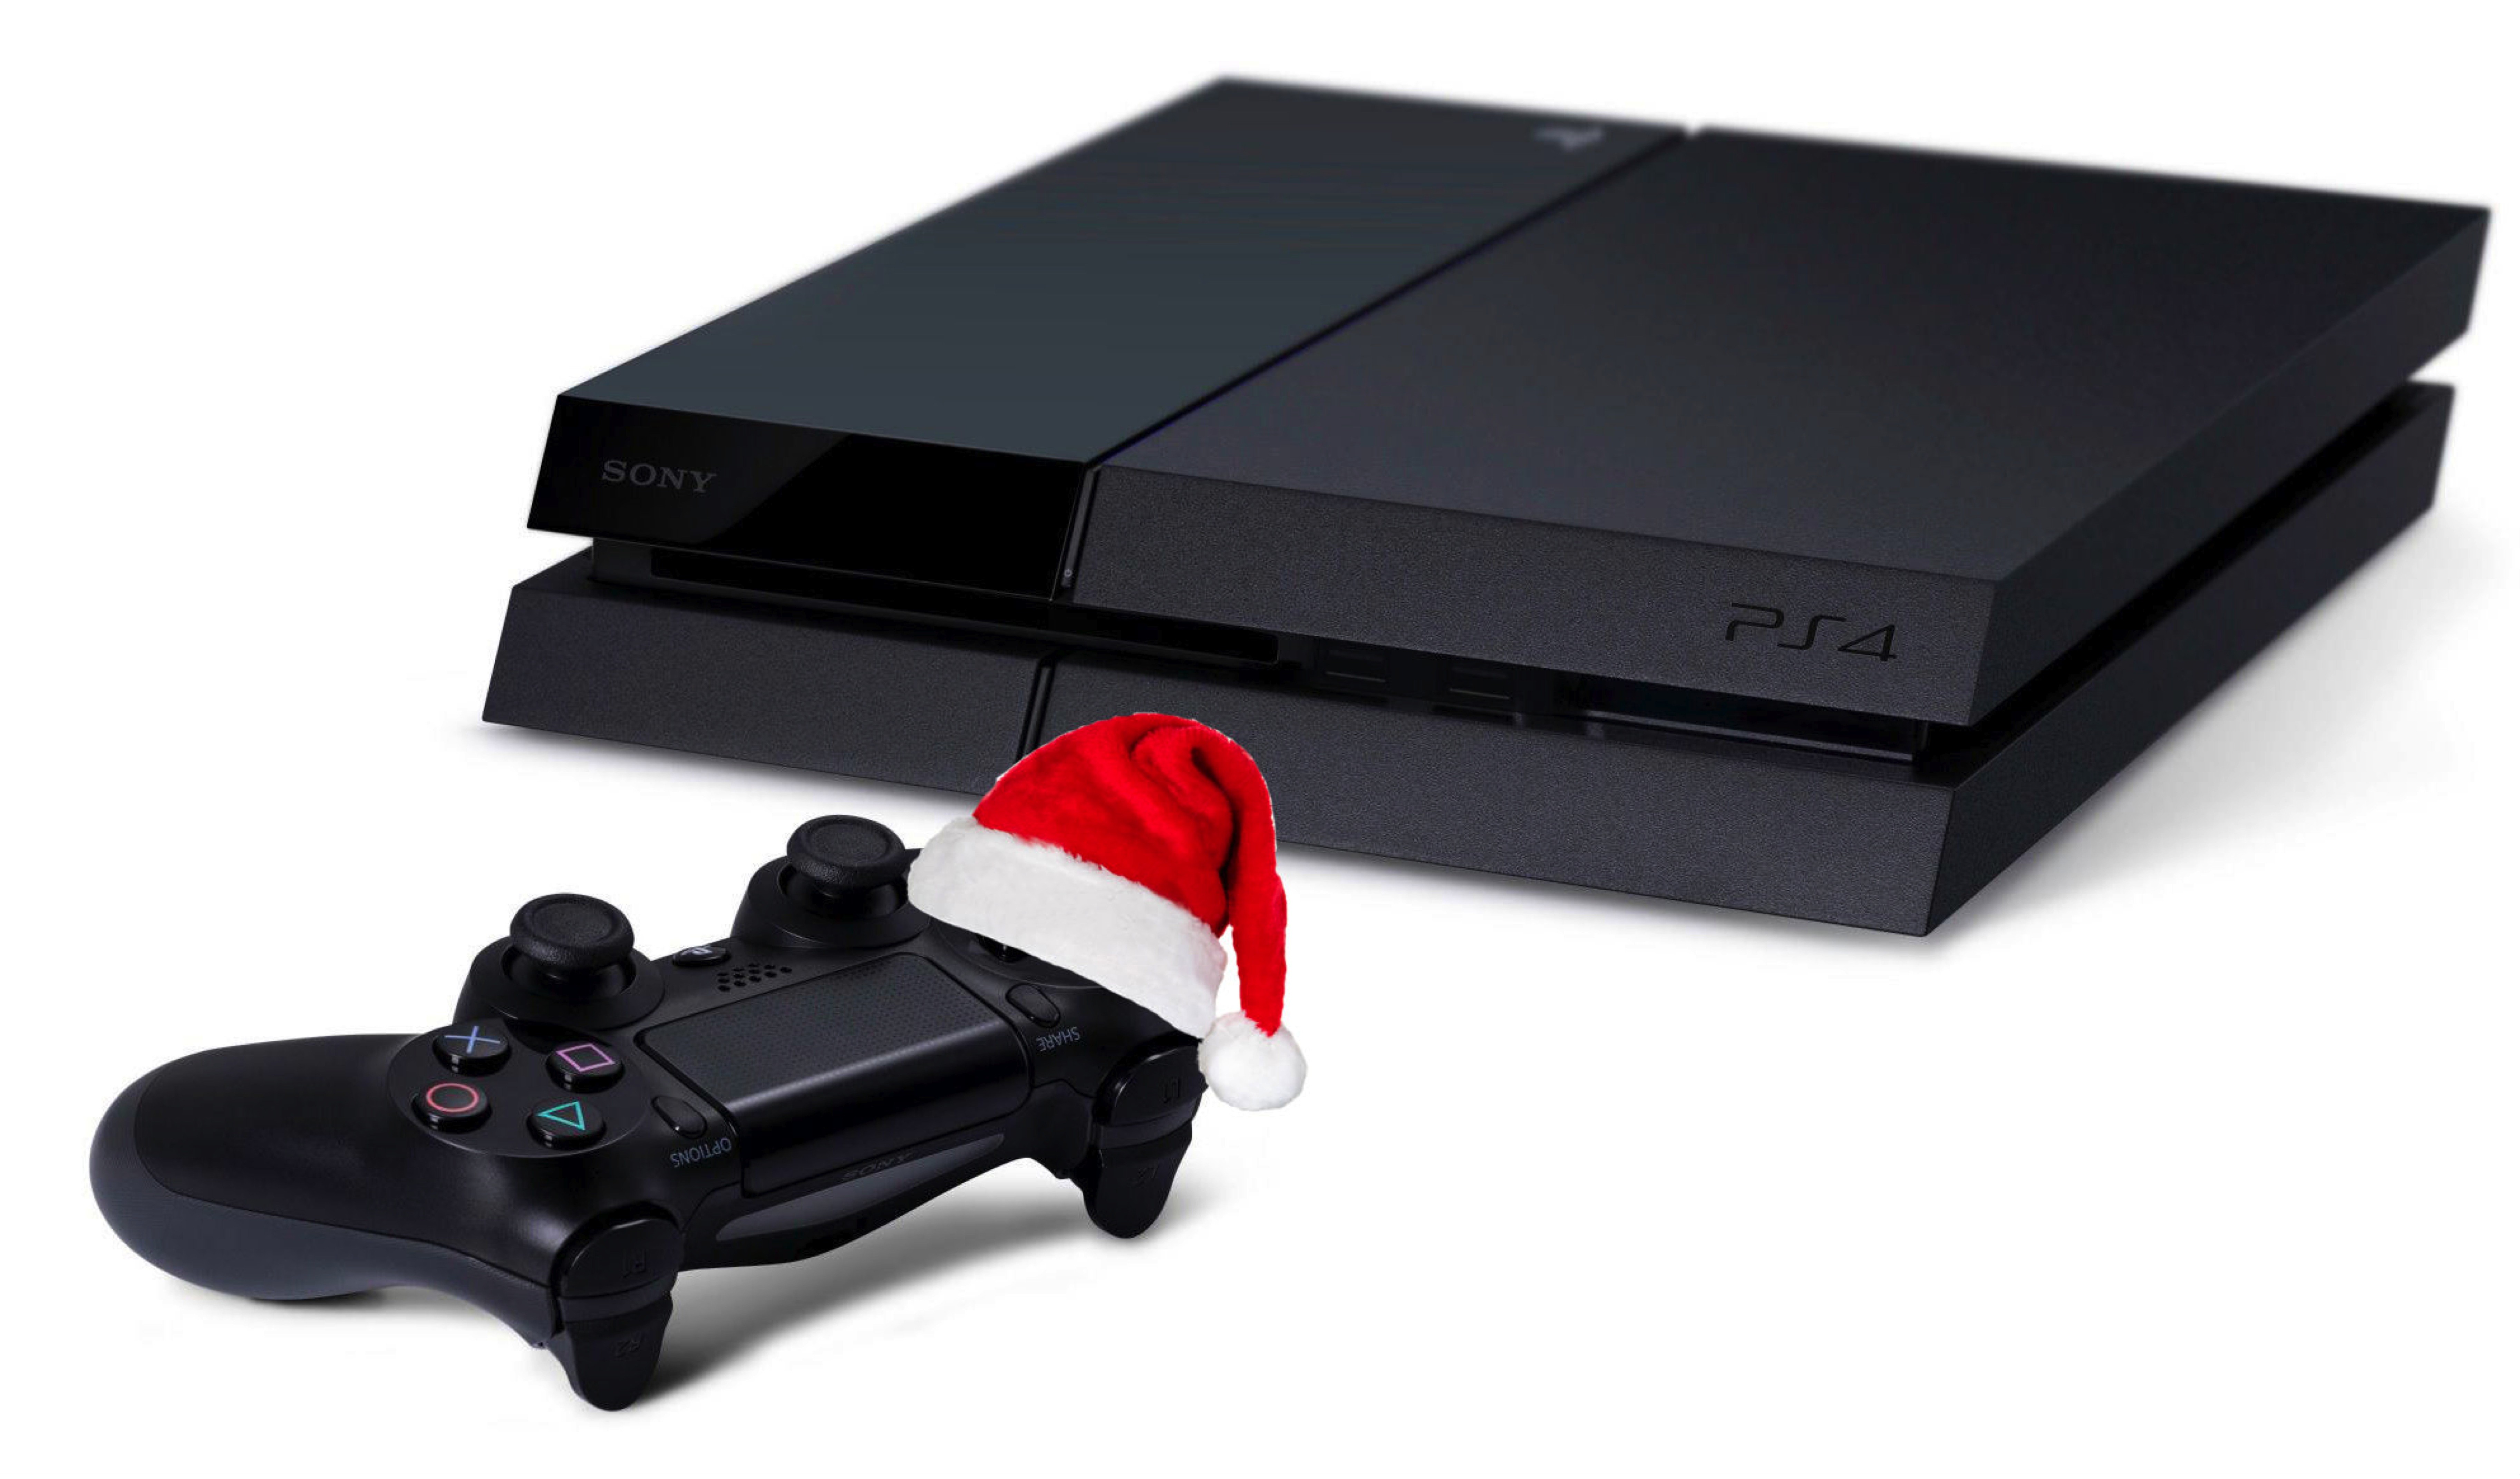 PS4 for Christmas